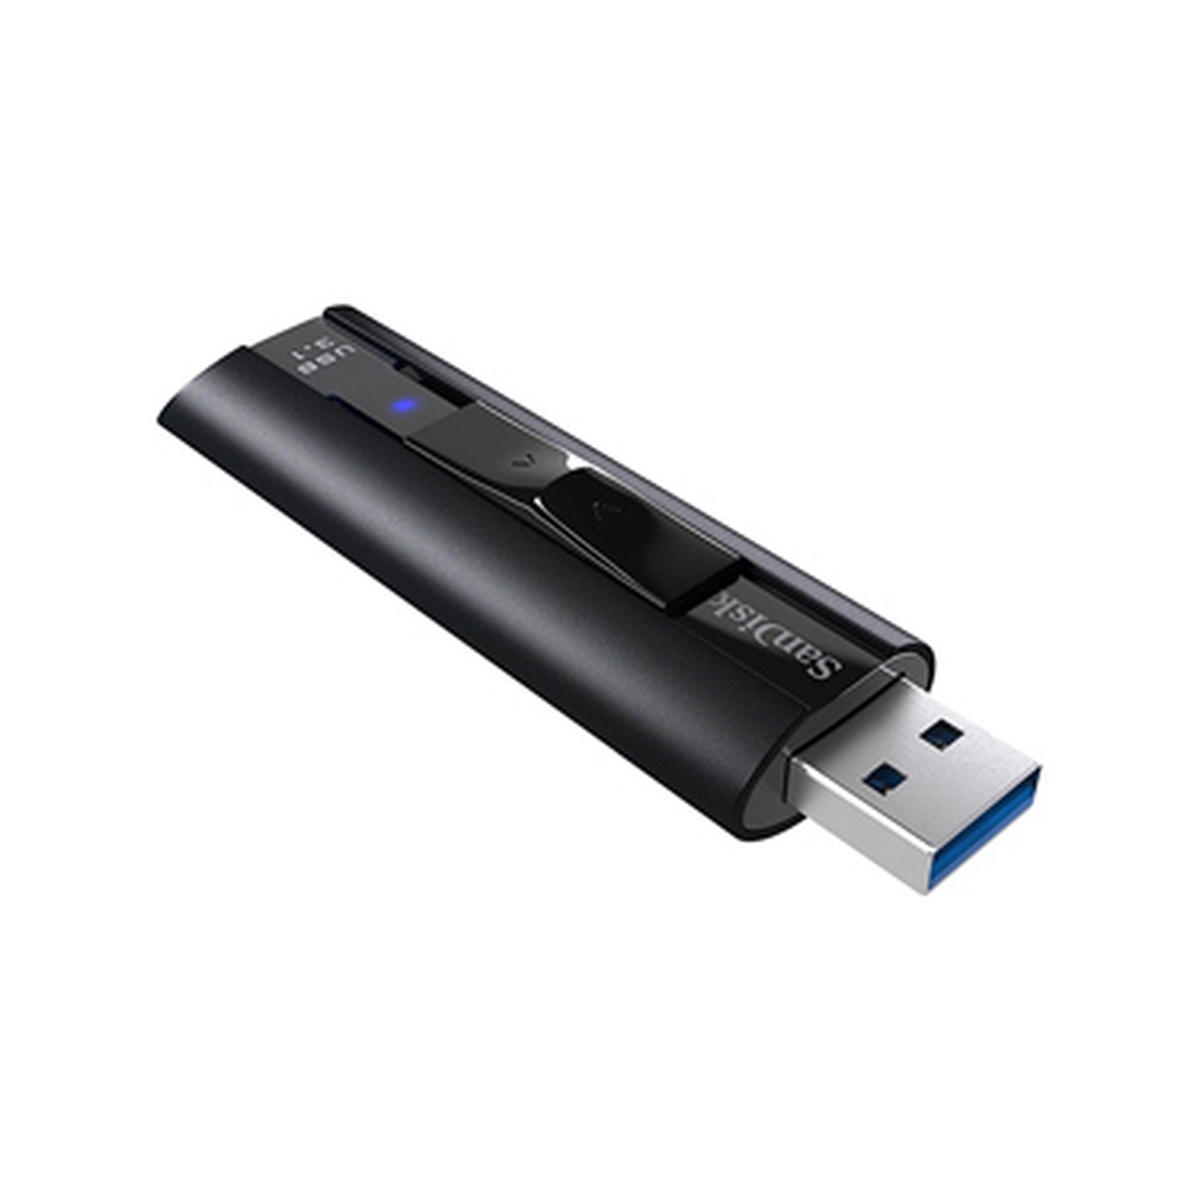 SanDisk Cruzer Extreme Pro 128GB USB 3.1